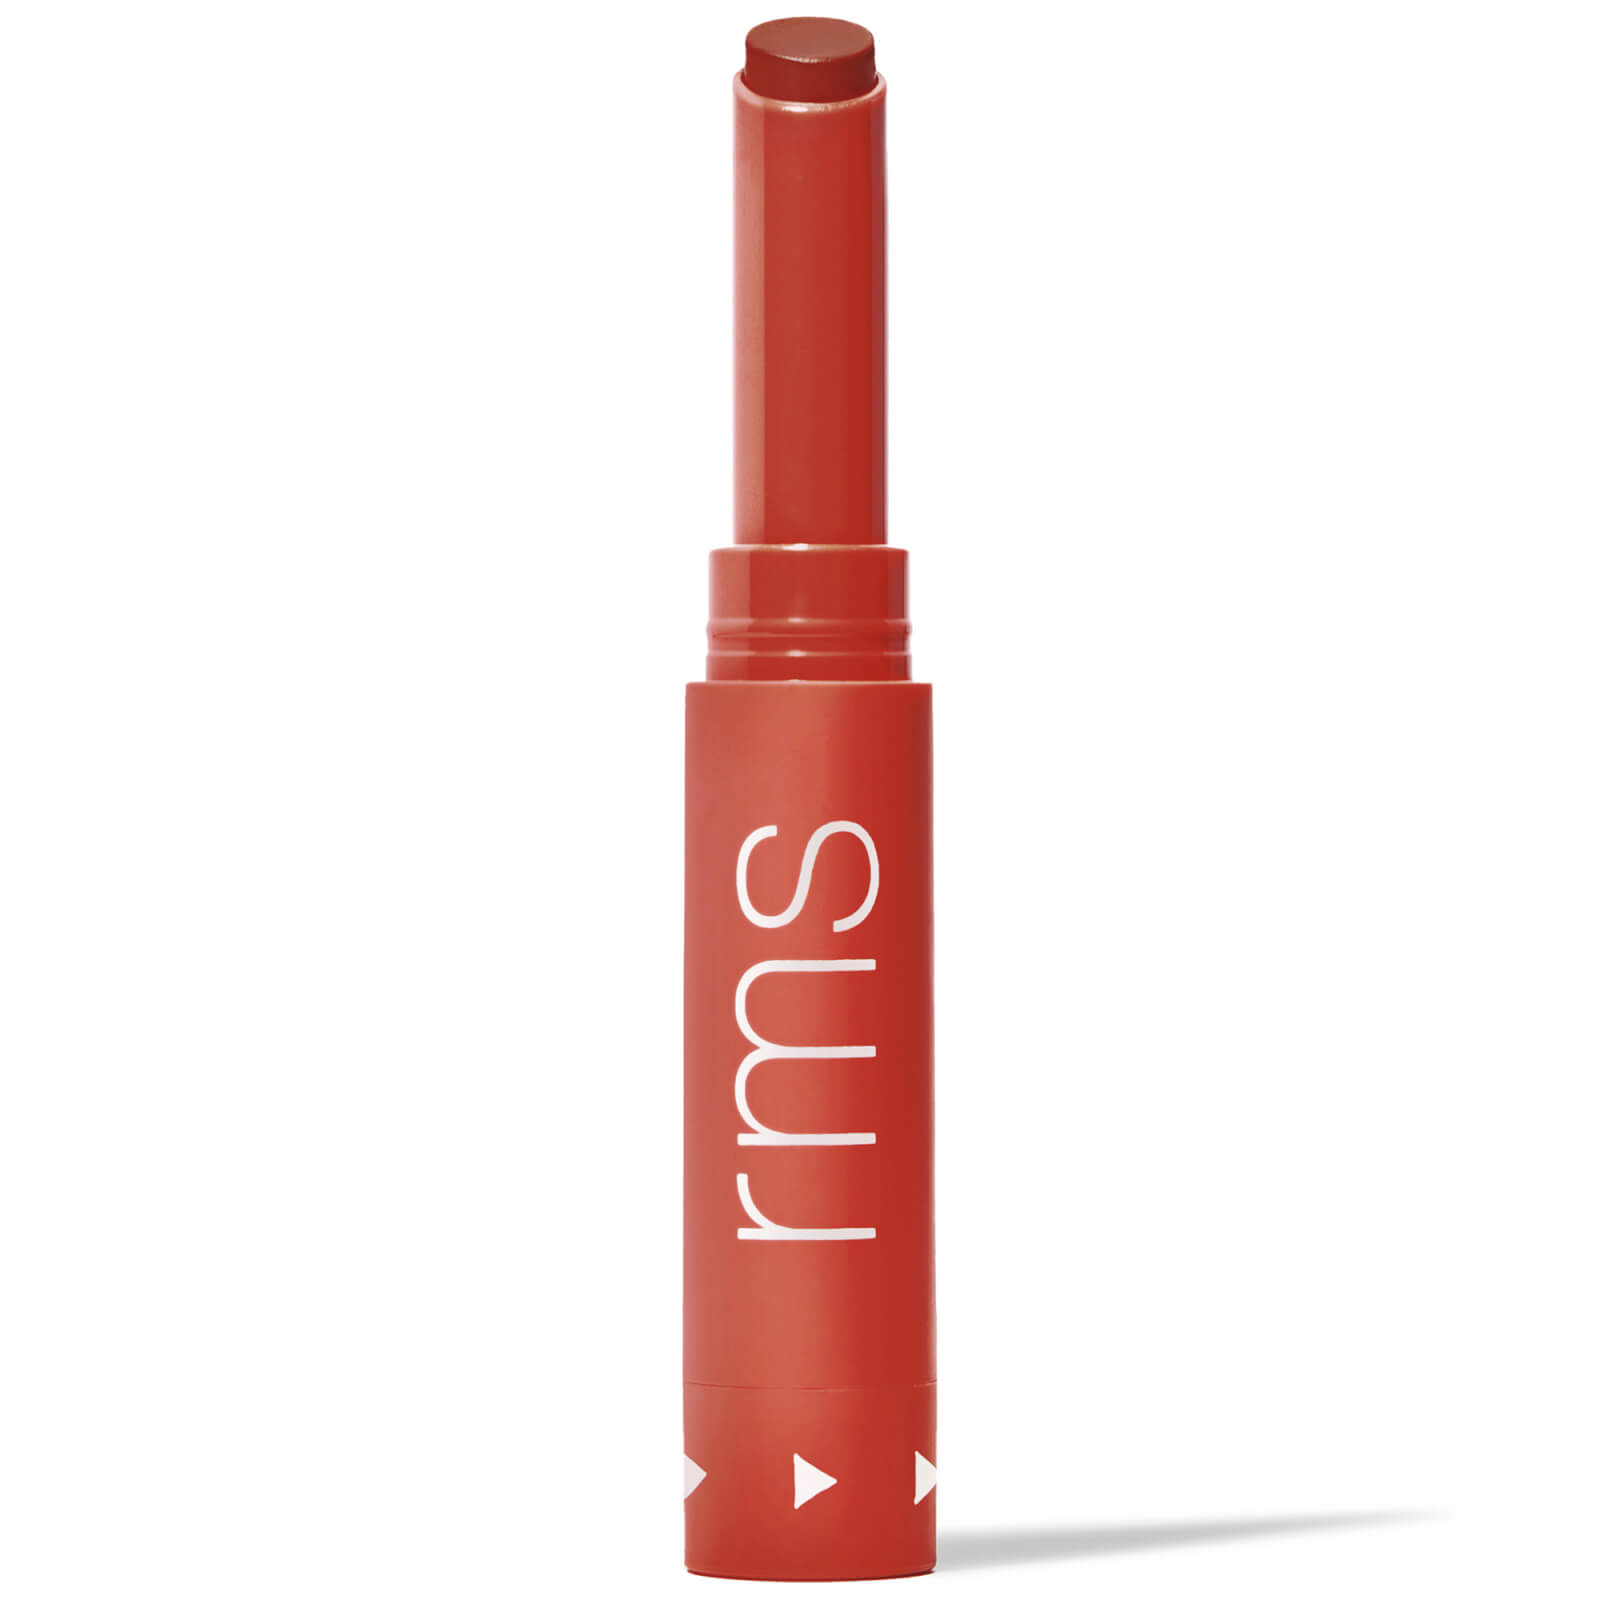 Rms Beauty Legendary Serum Lipstick 17g (various Shades) - Mickey In Linda